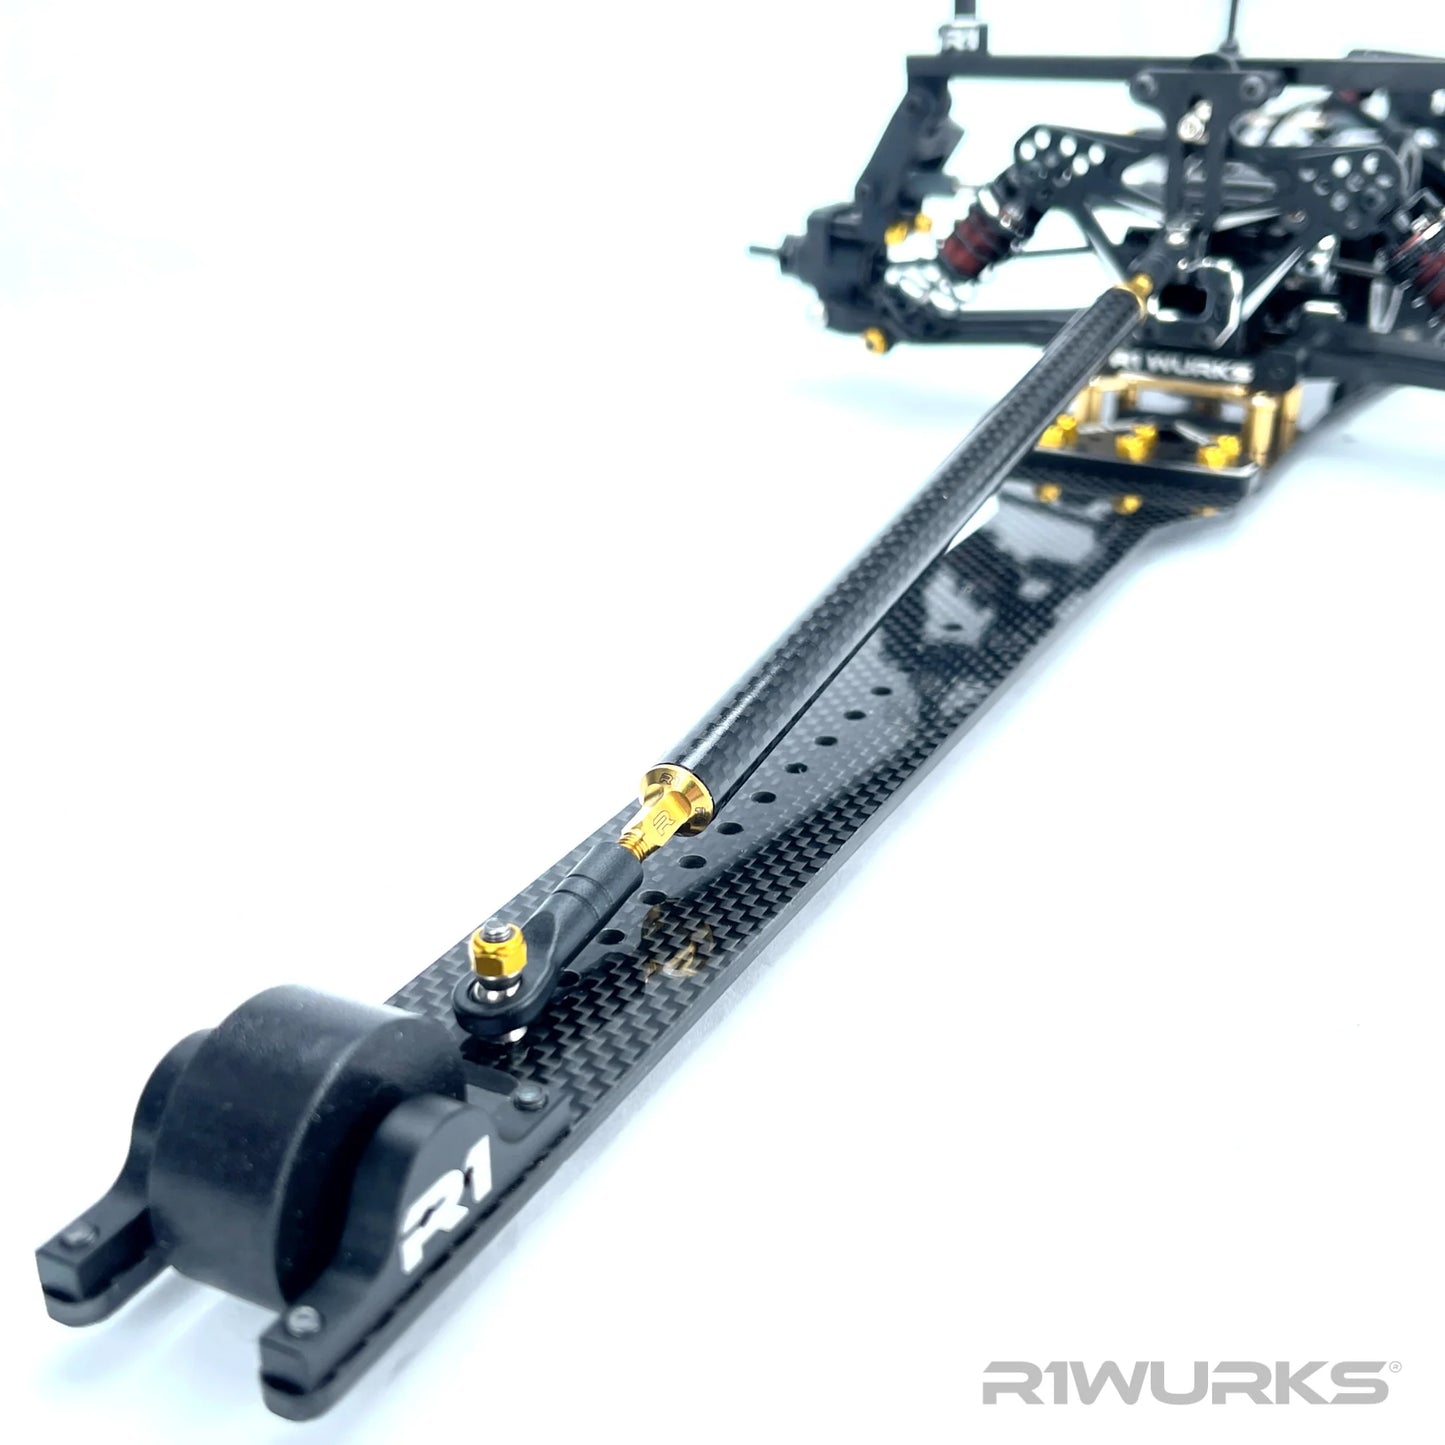 R1 Wurks Titanium/Carbon Fiber Wheelie Bar Turnbuckle [250mm – 265mm]